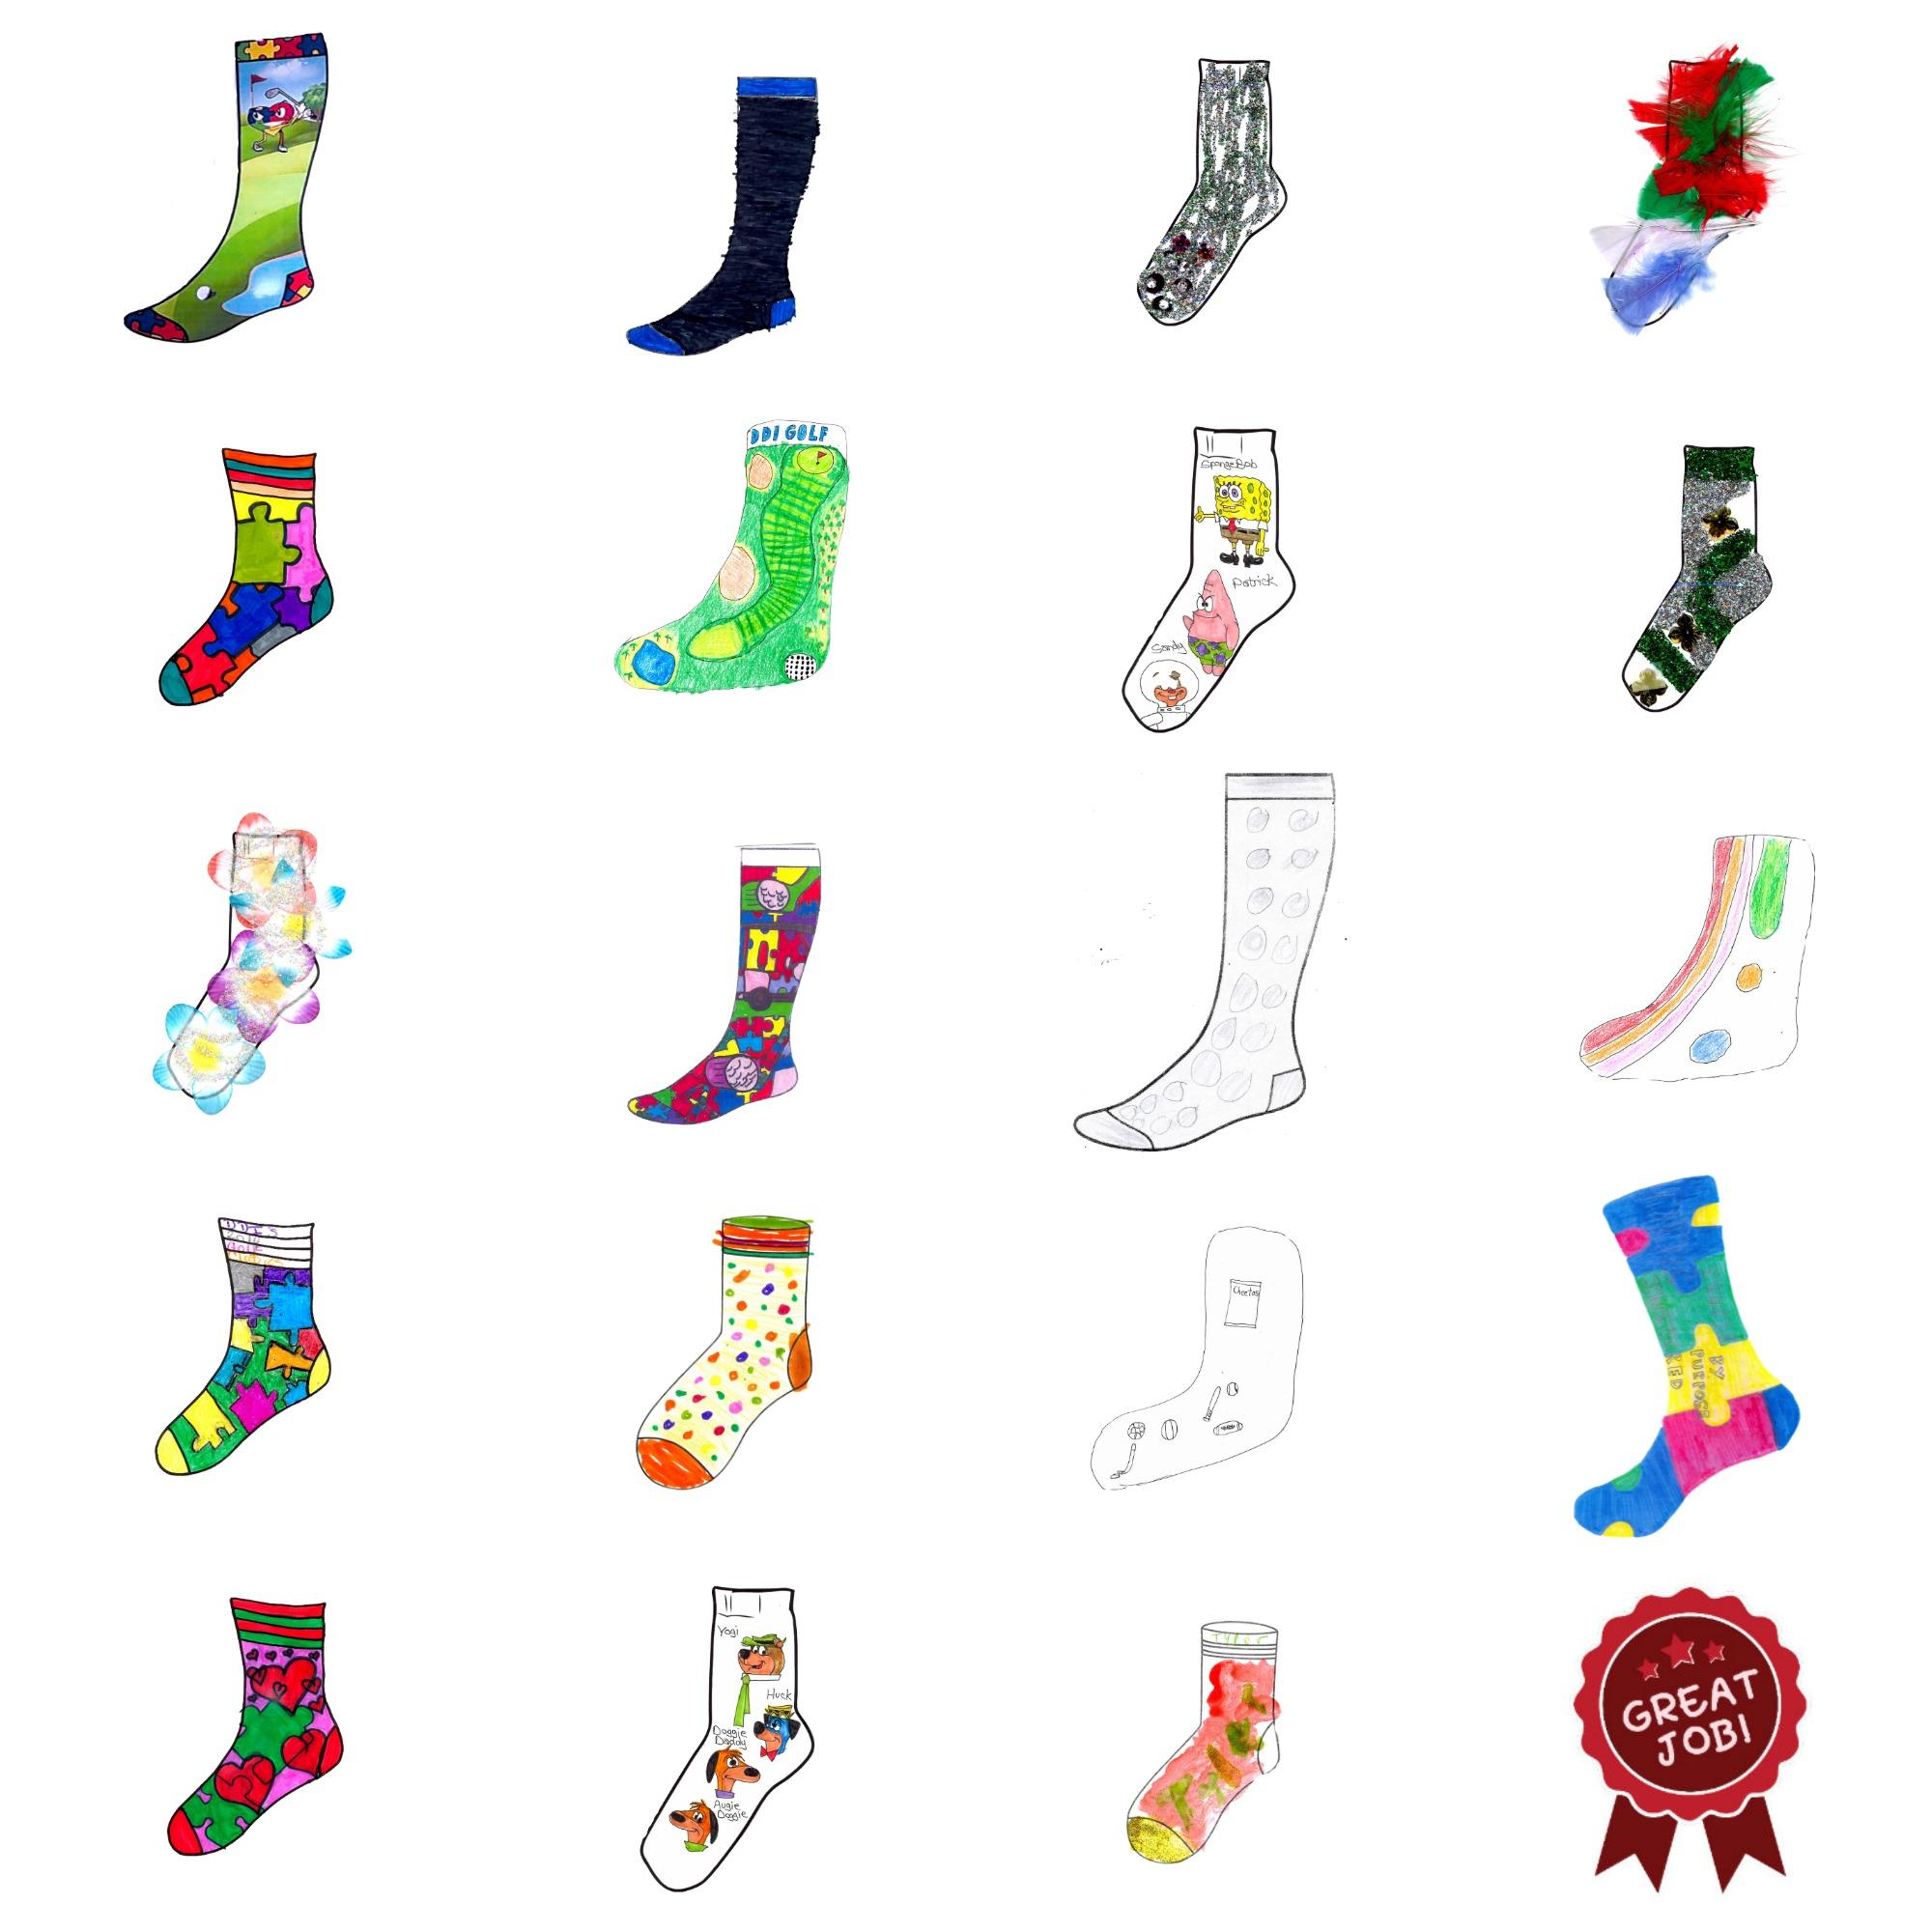 Sock design contest entries